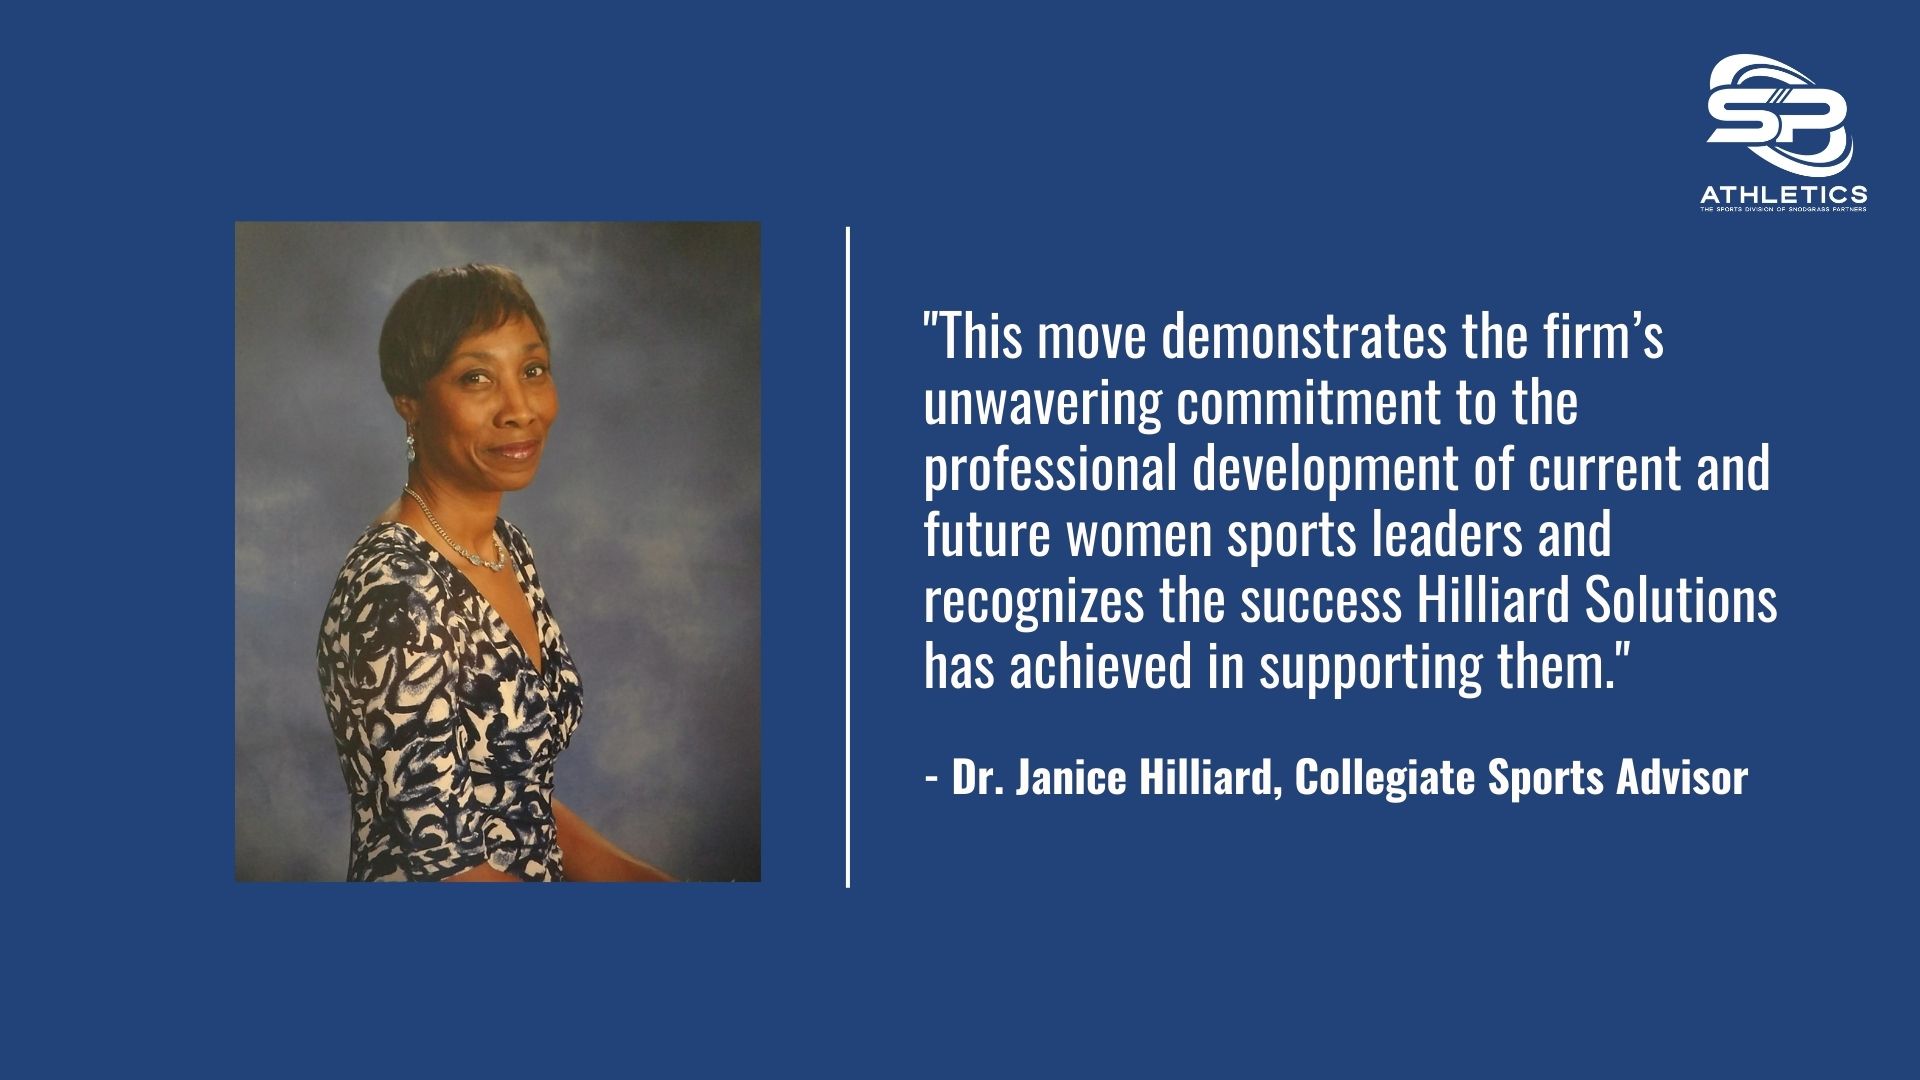 NEWS: Dr. Janice Hilliard Joins SP Athletics as Collegiate Sports Advisor